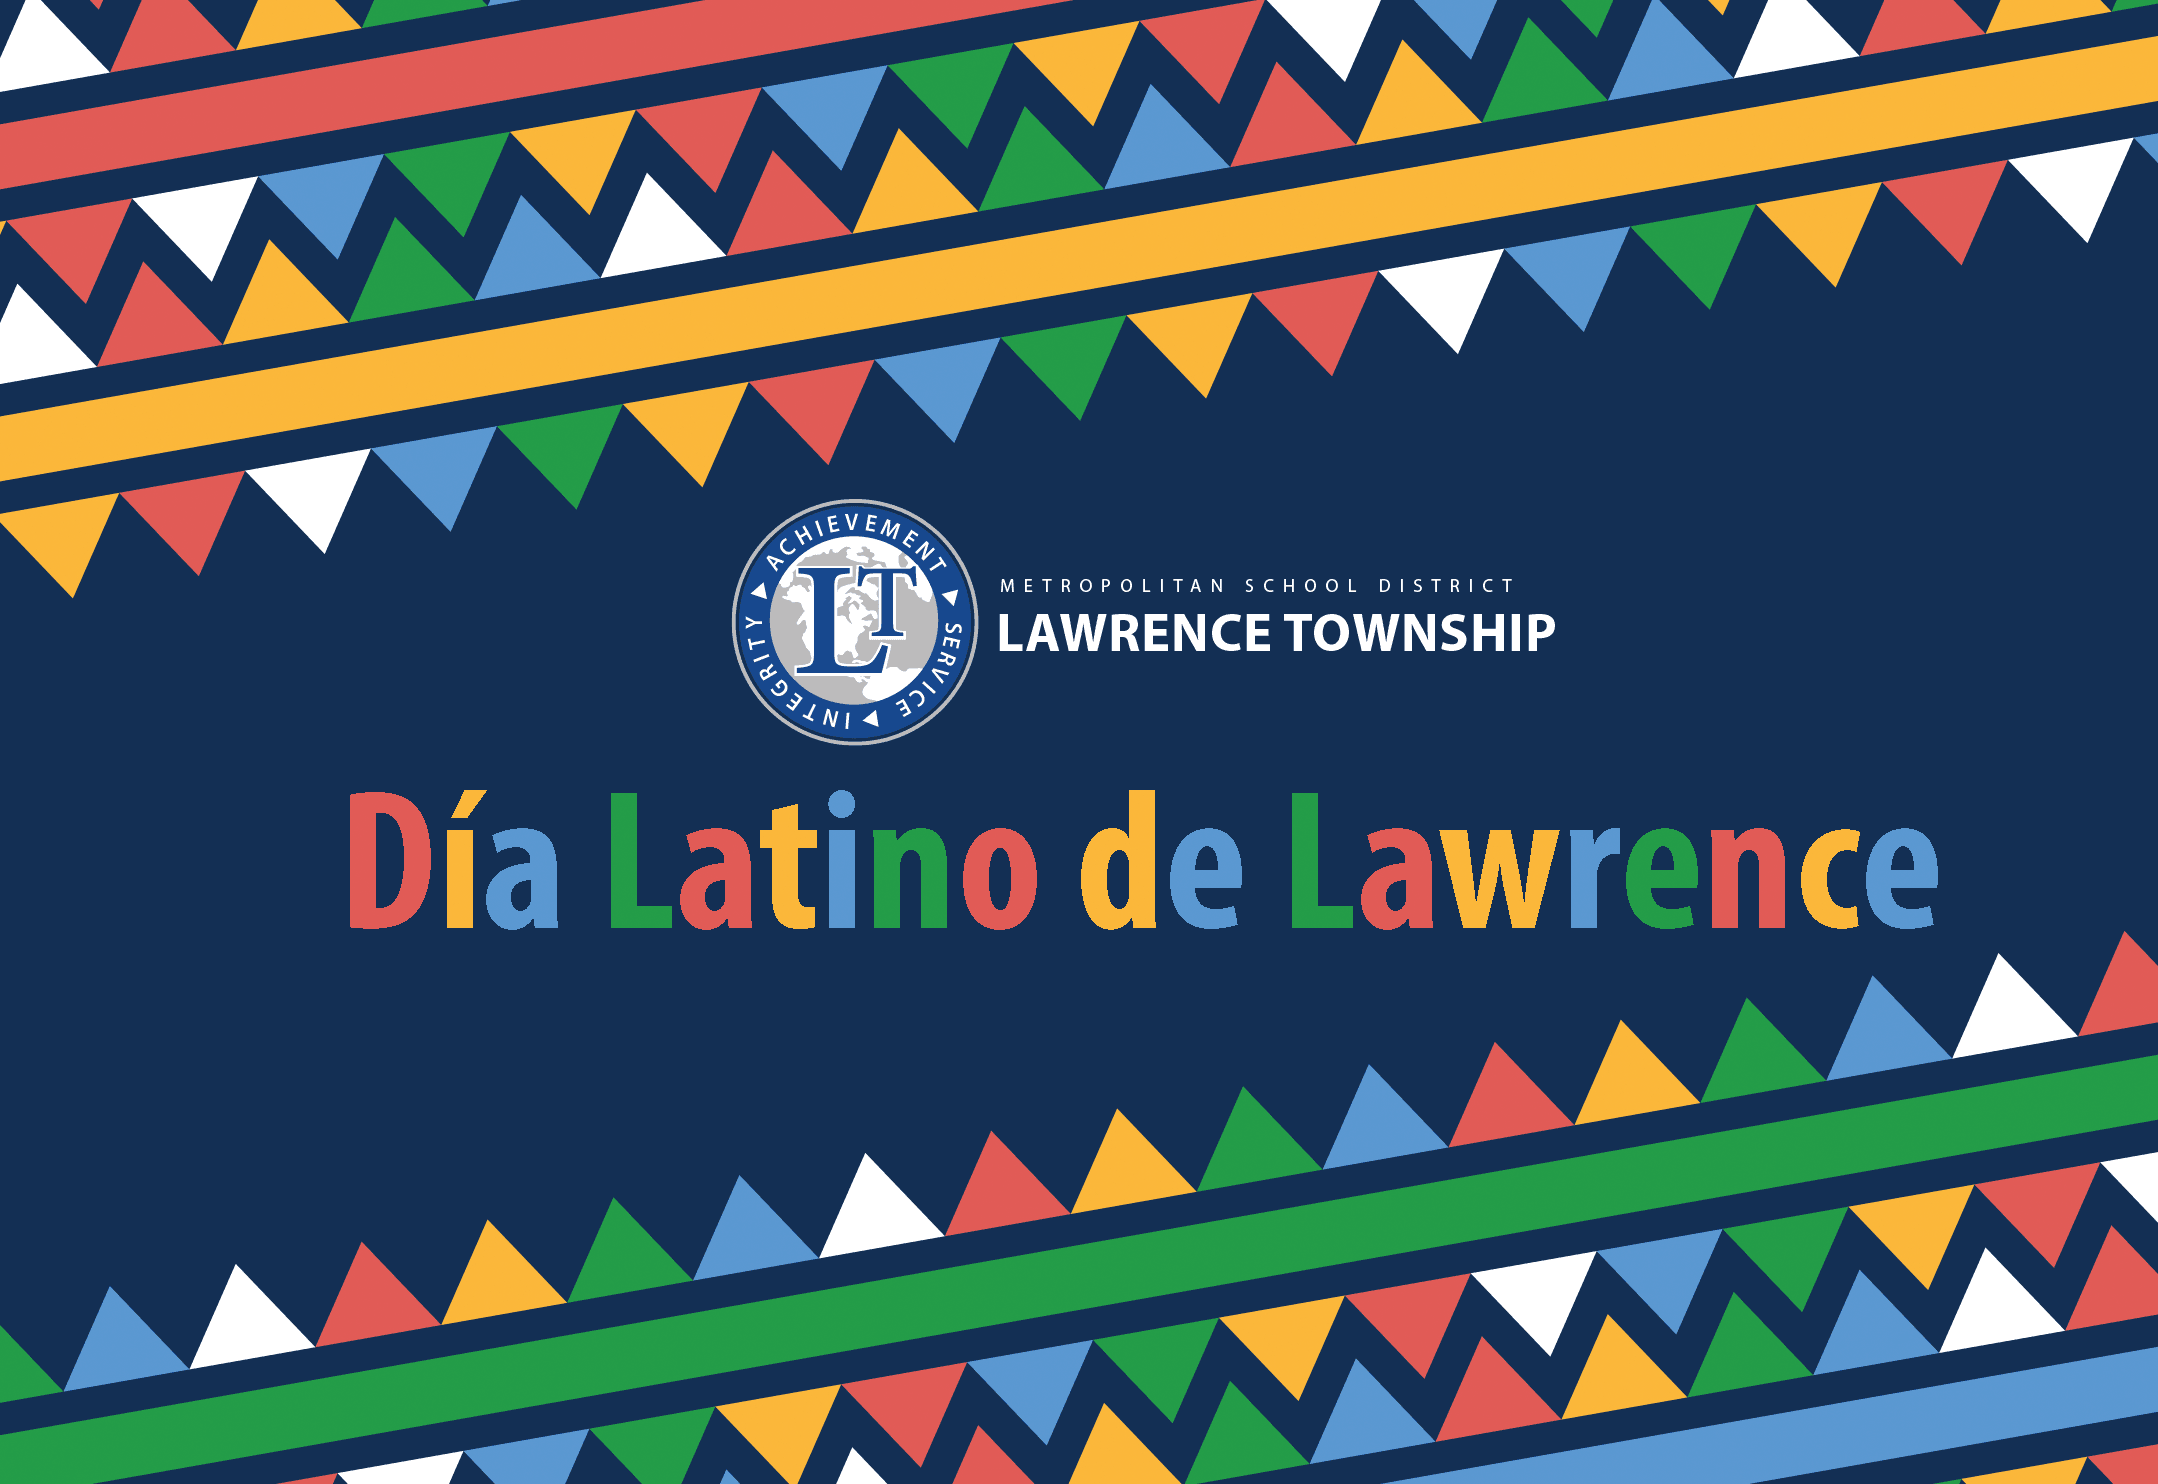 Dia Latino de Lawrence Sponsorships